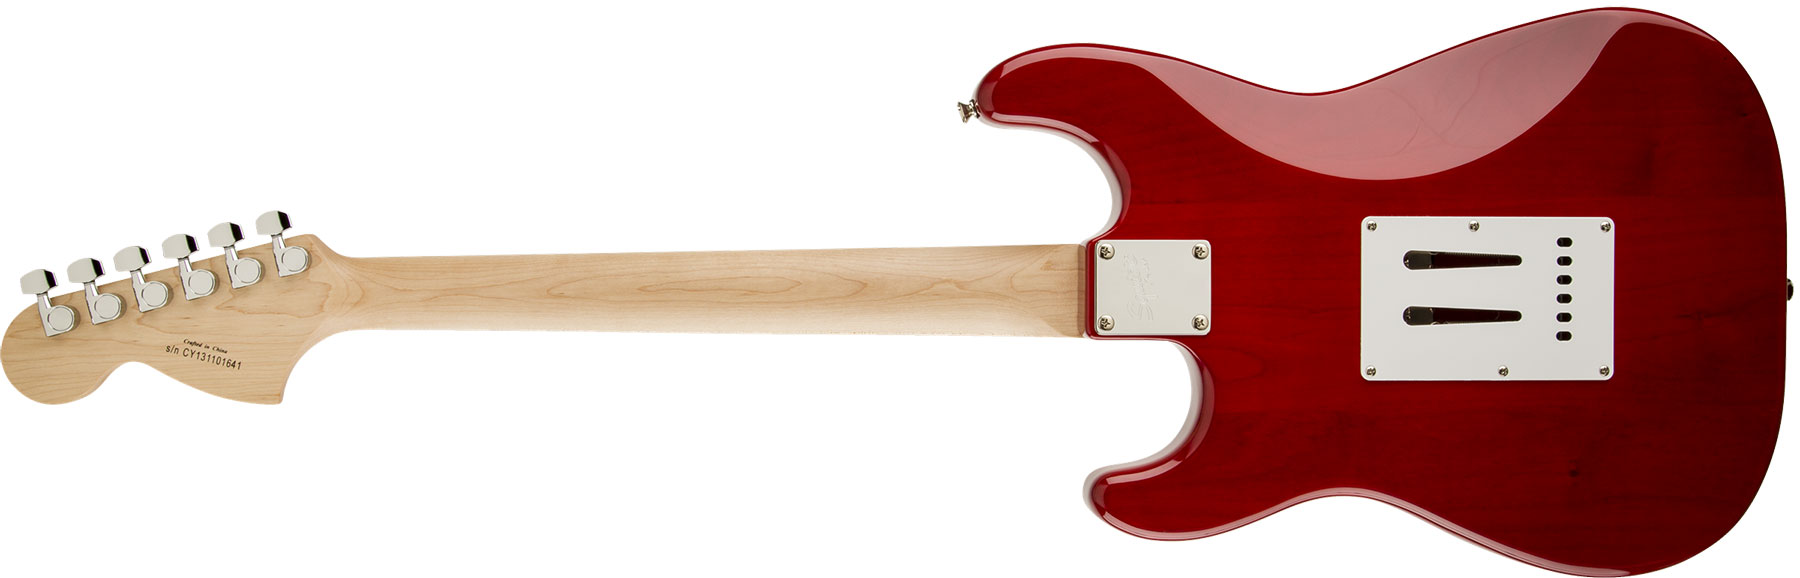 Squier Strat Standard Lau - Cherry Sunburst - Str shape electric guitar - Variation 1